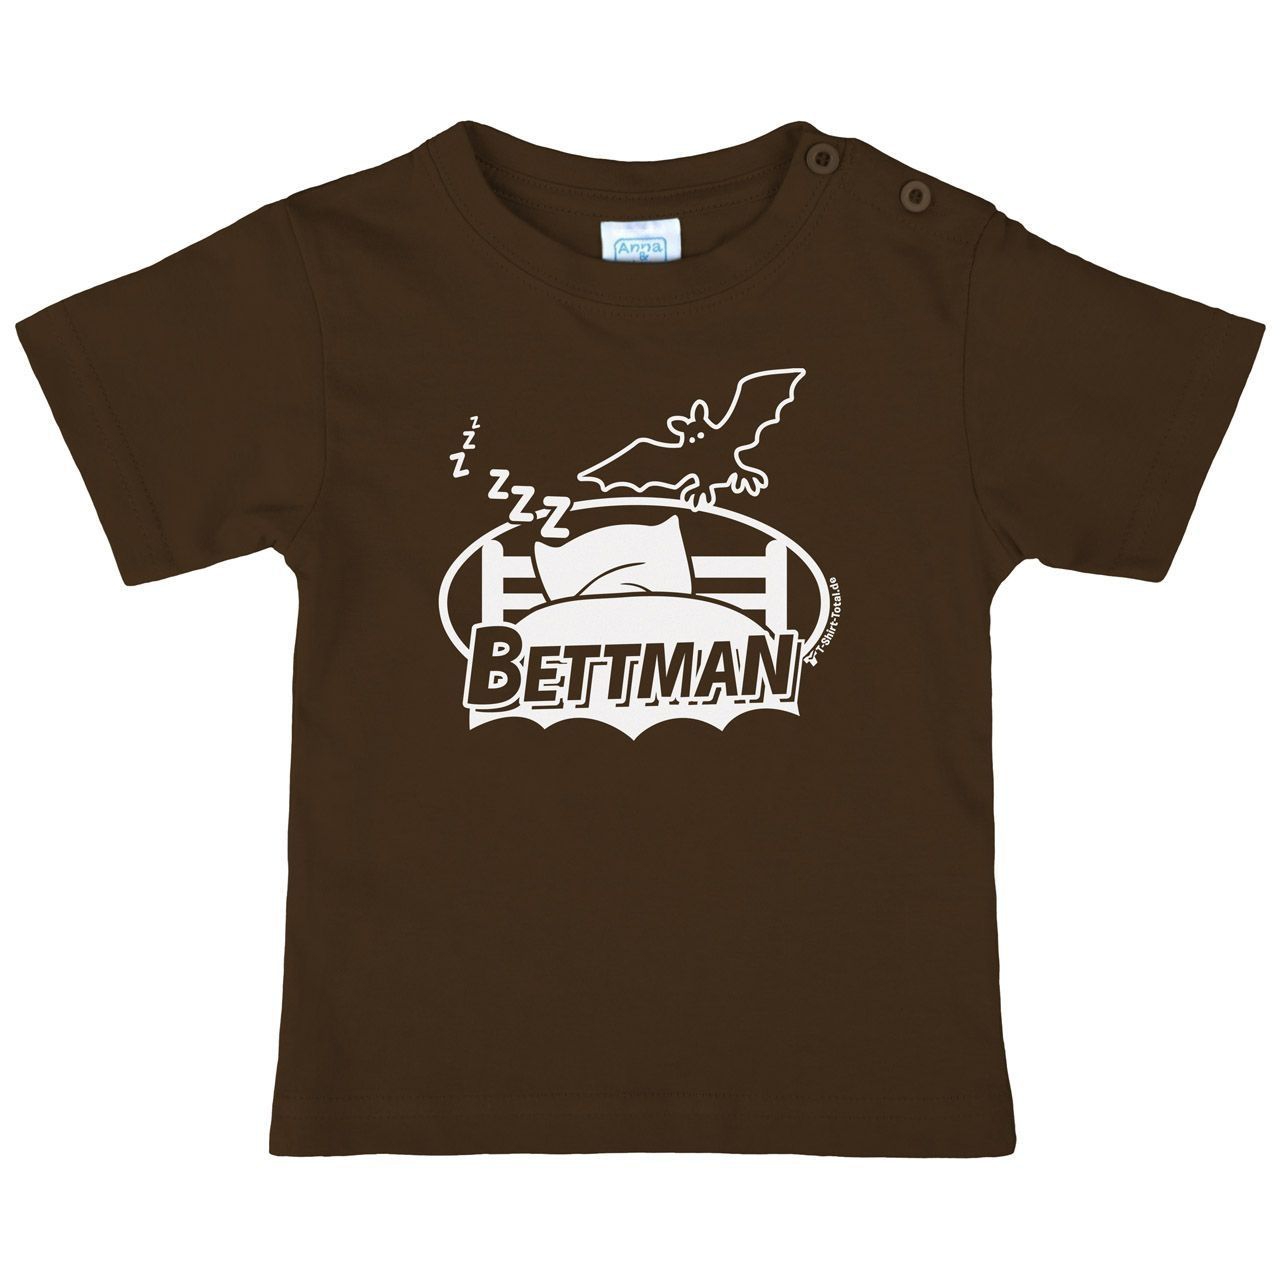 Bettman Kinder T-Shirt braun 56 / 62